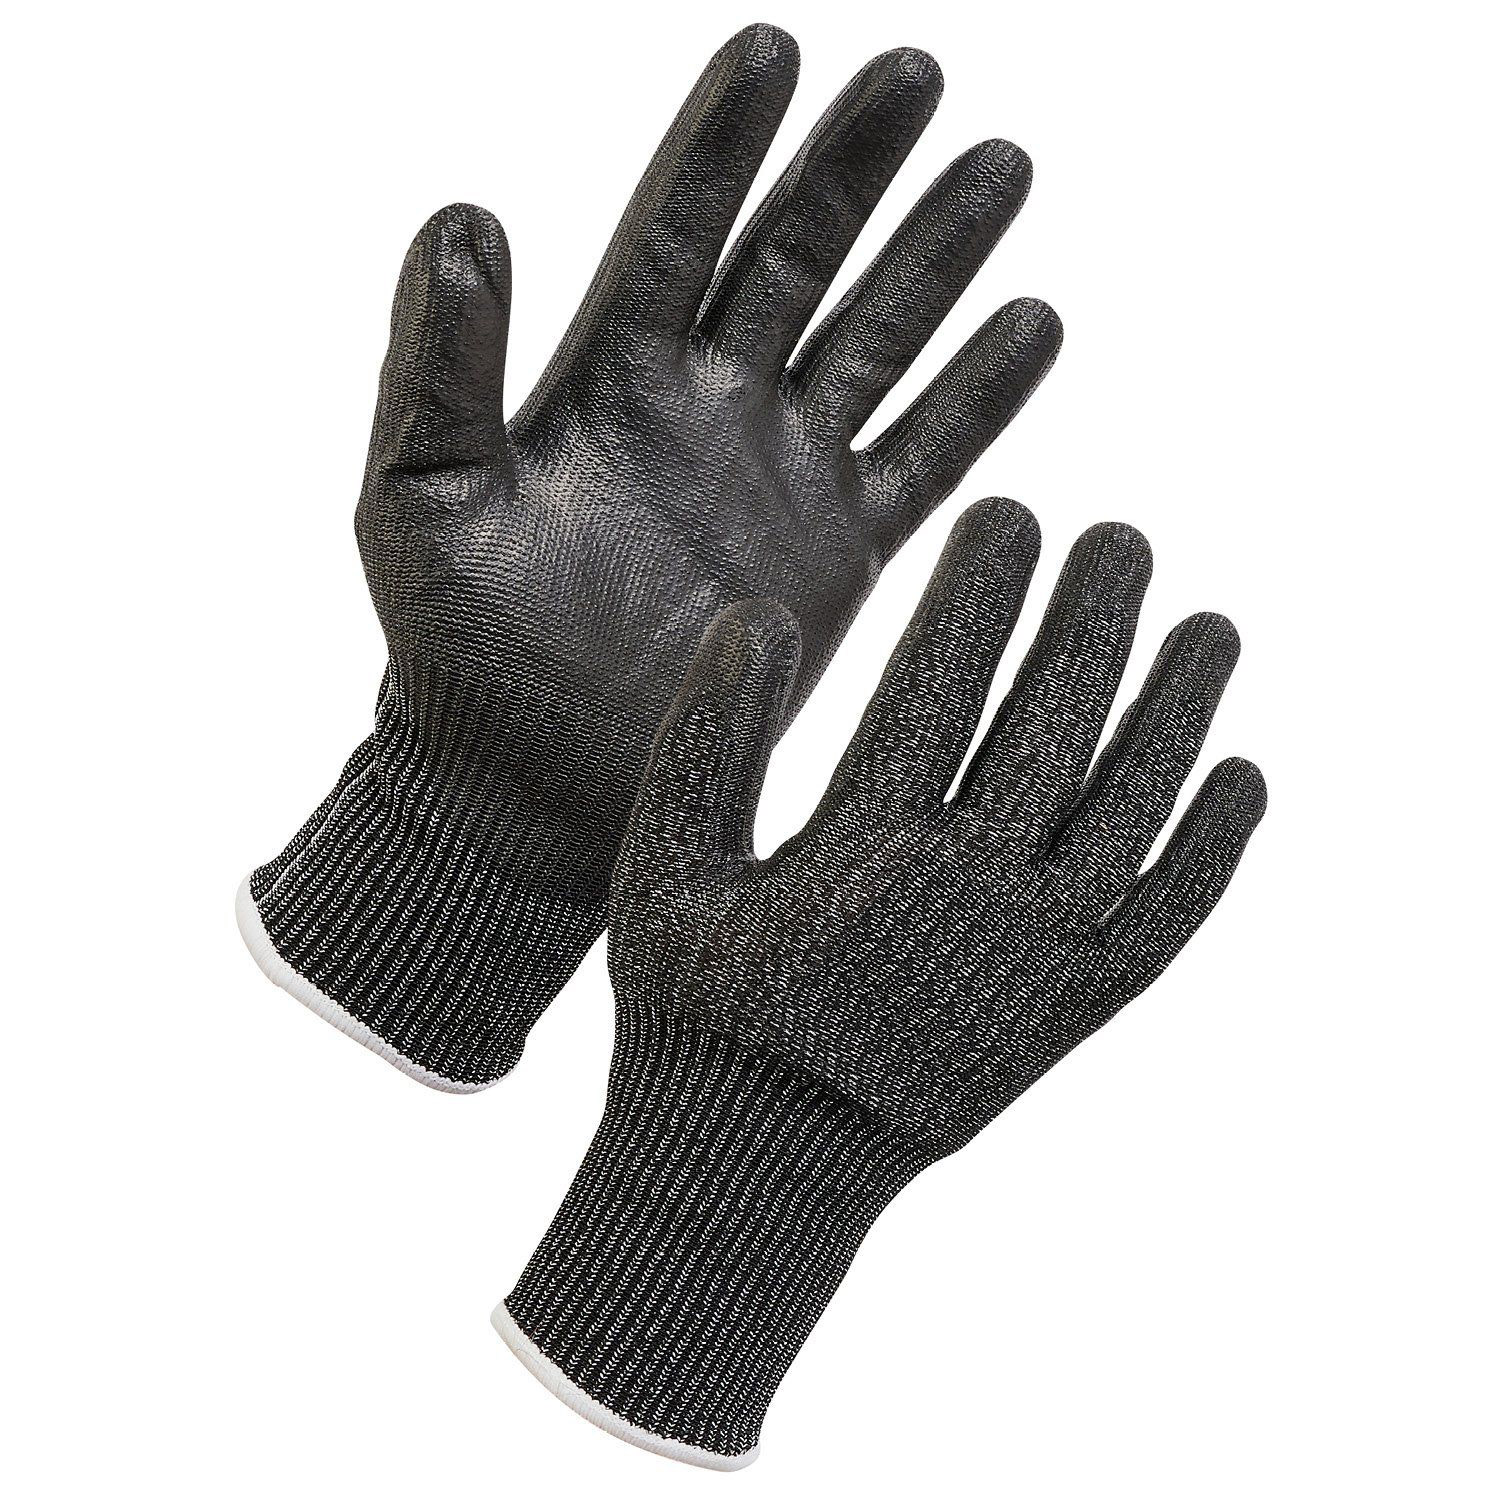 Deflector PF Cut Resistant Gloves